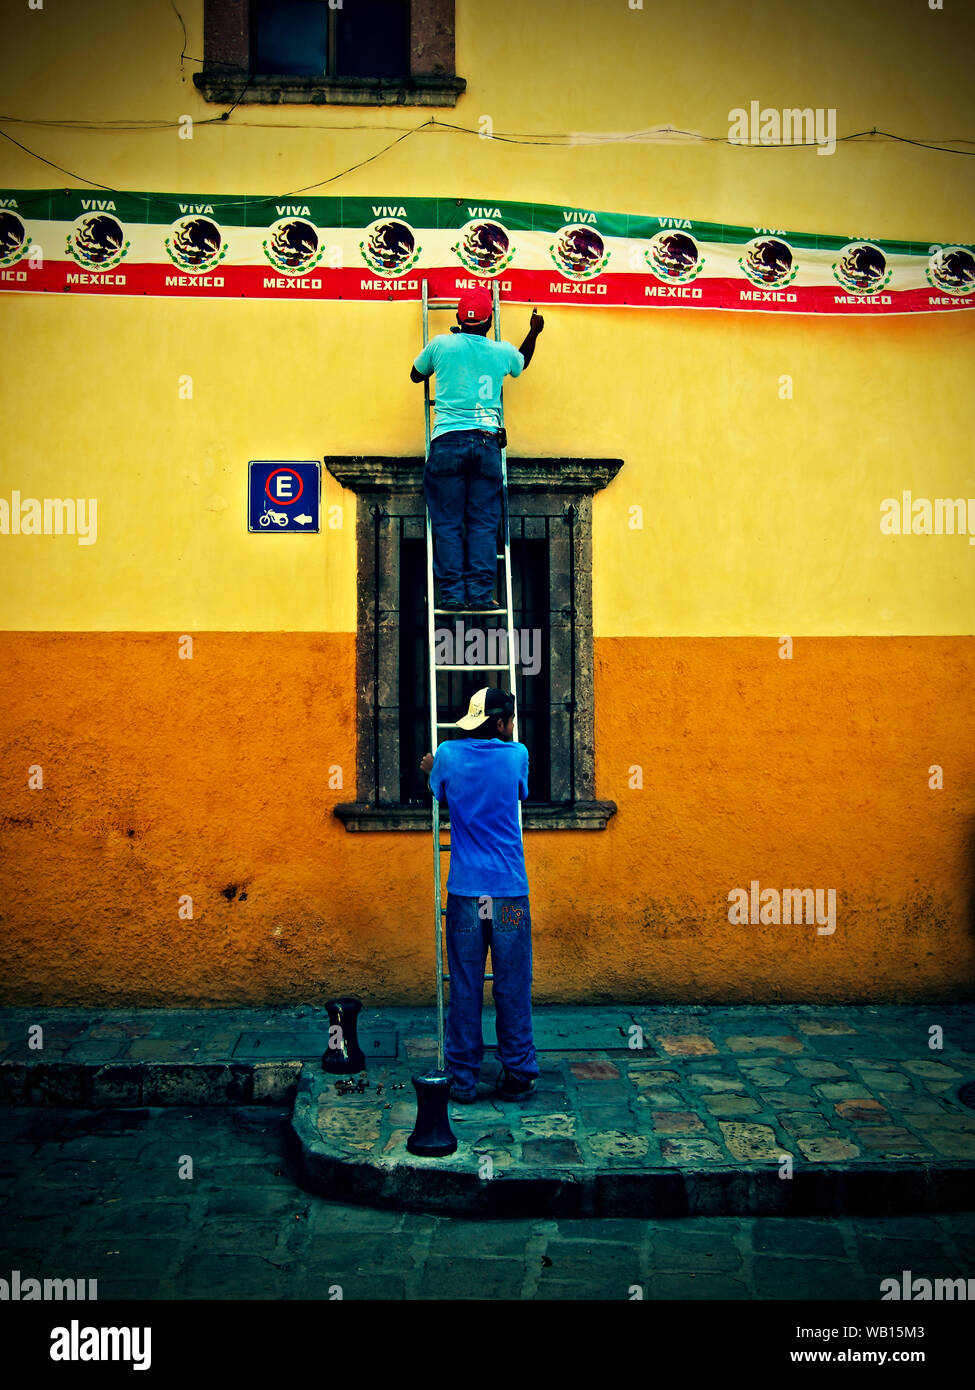 House and shop fronts, San Miguel de Allende, Mexico Stock Photo